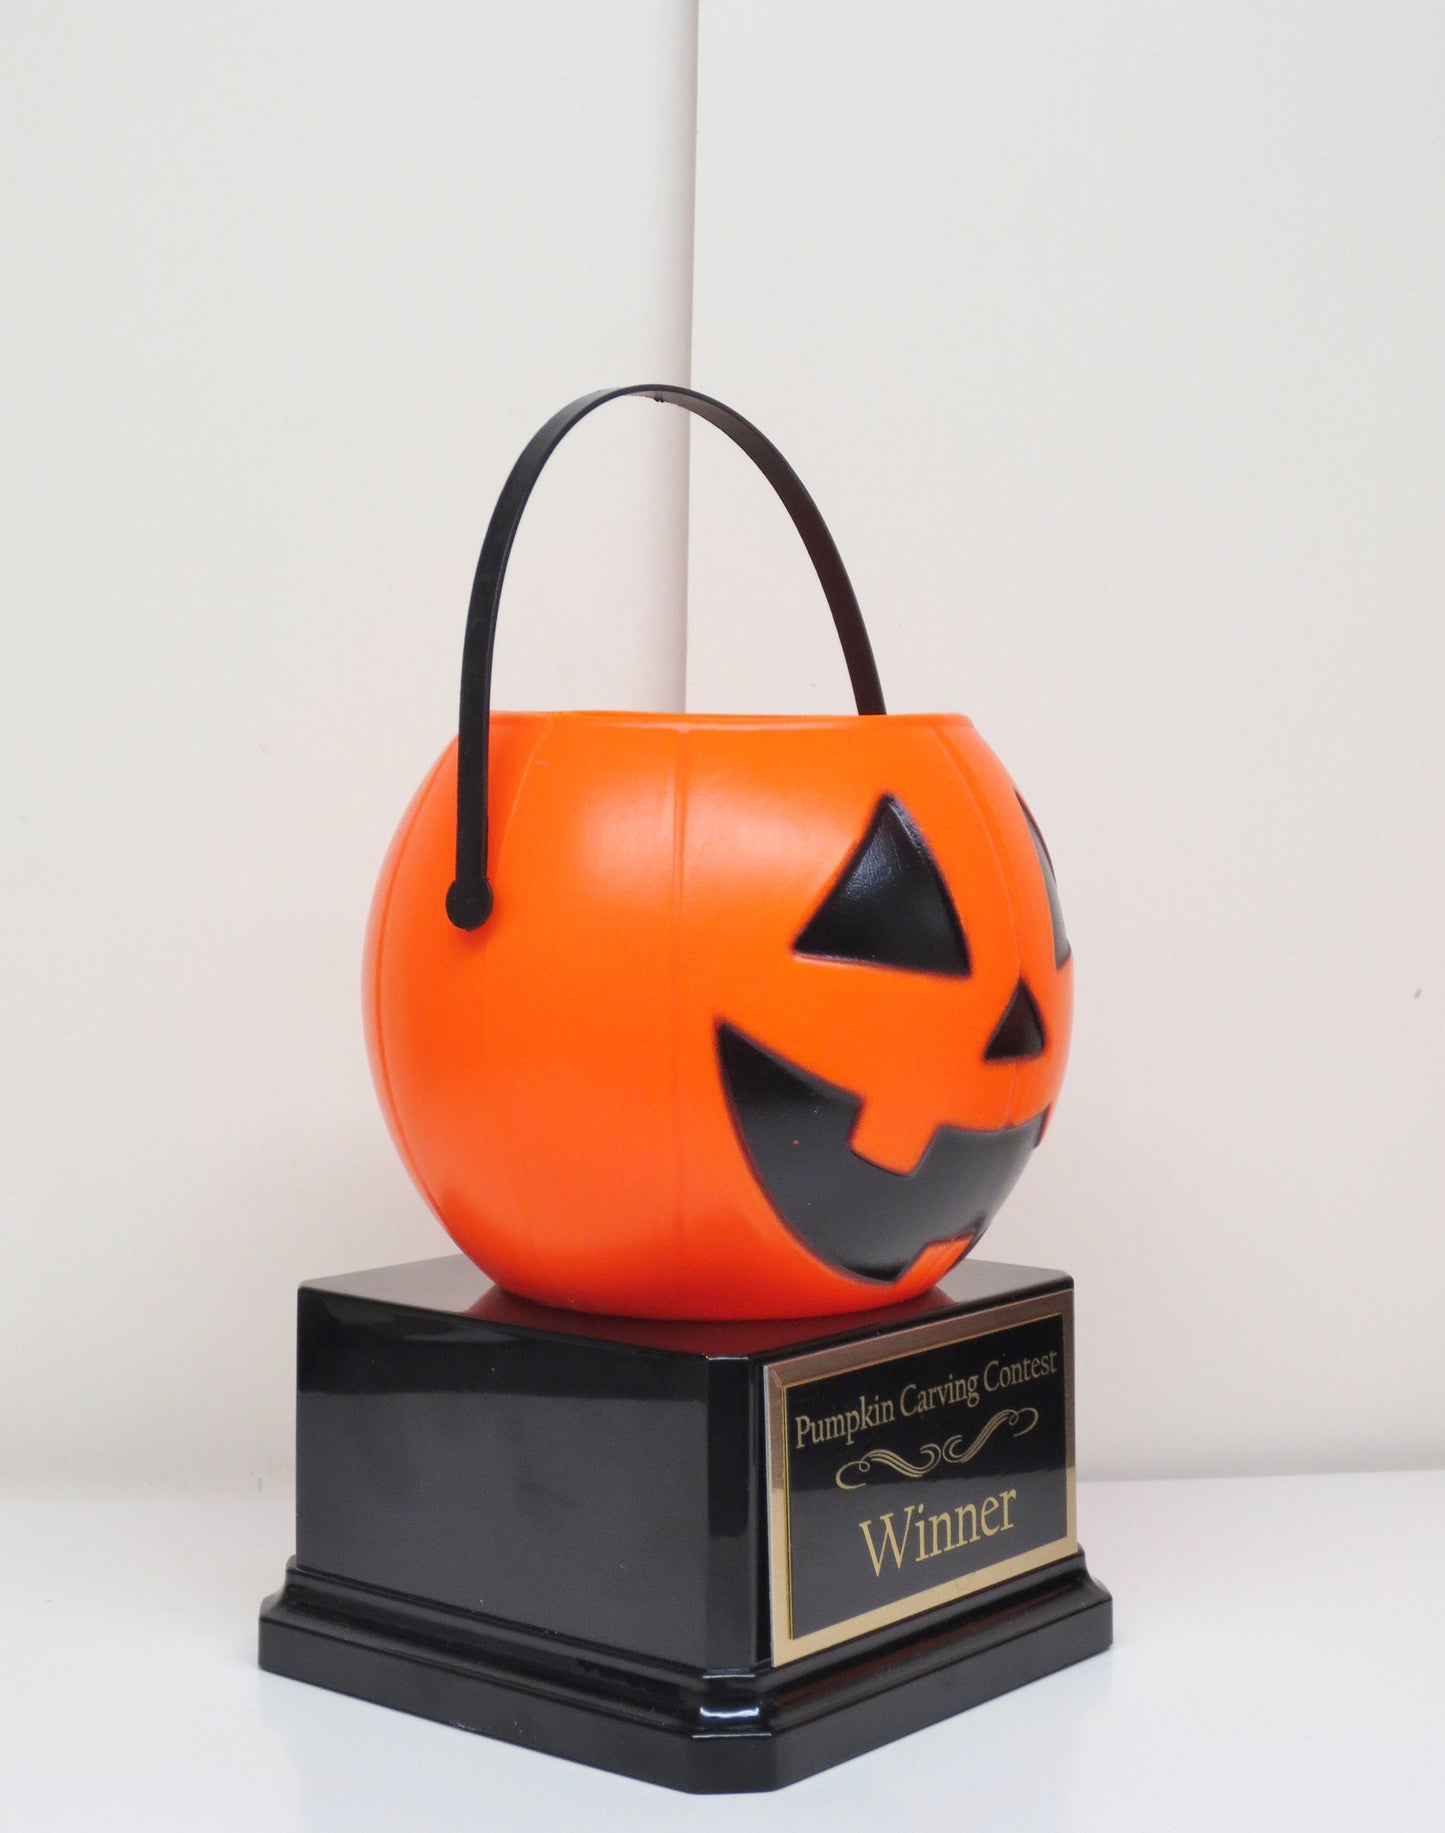 Halloween Trophy Trophies Cute Pumpkin Carving Contest Trophy Best Costume Jack O Lantern Treat Pails Halloween Decor Pumpkin Decor